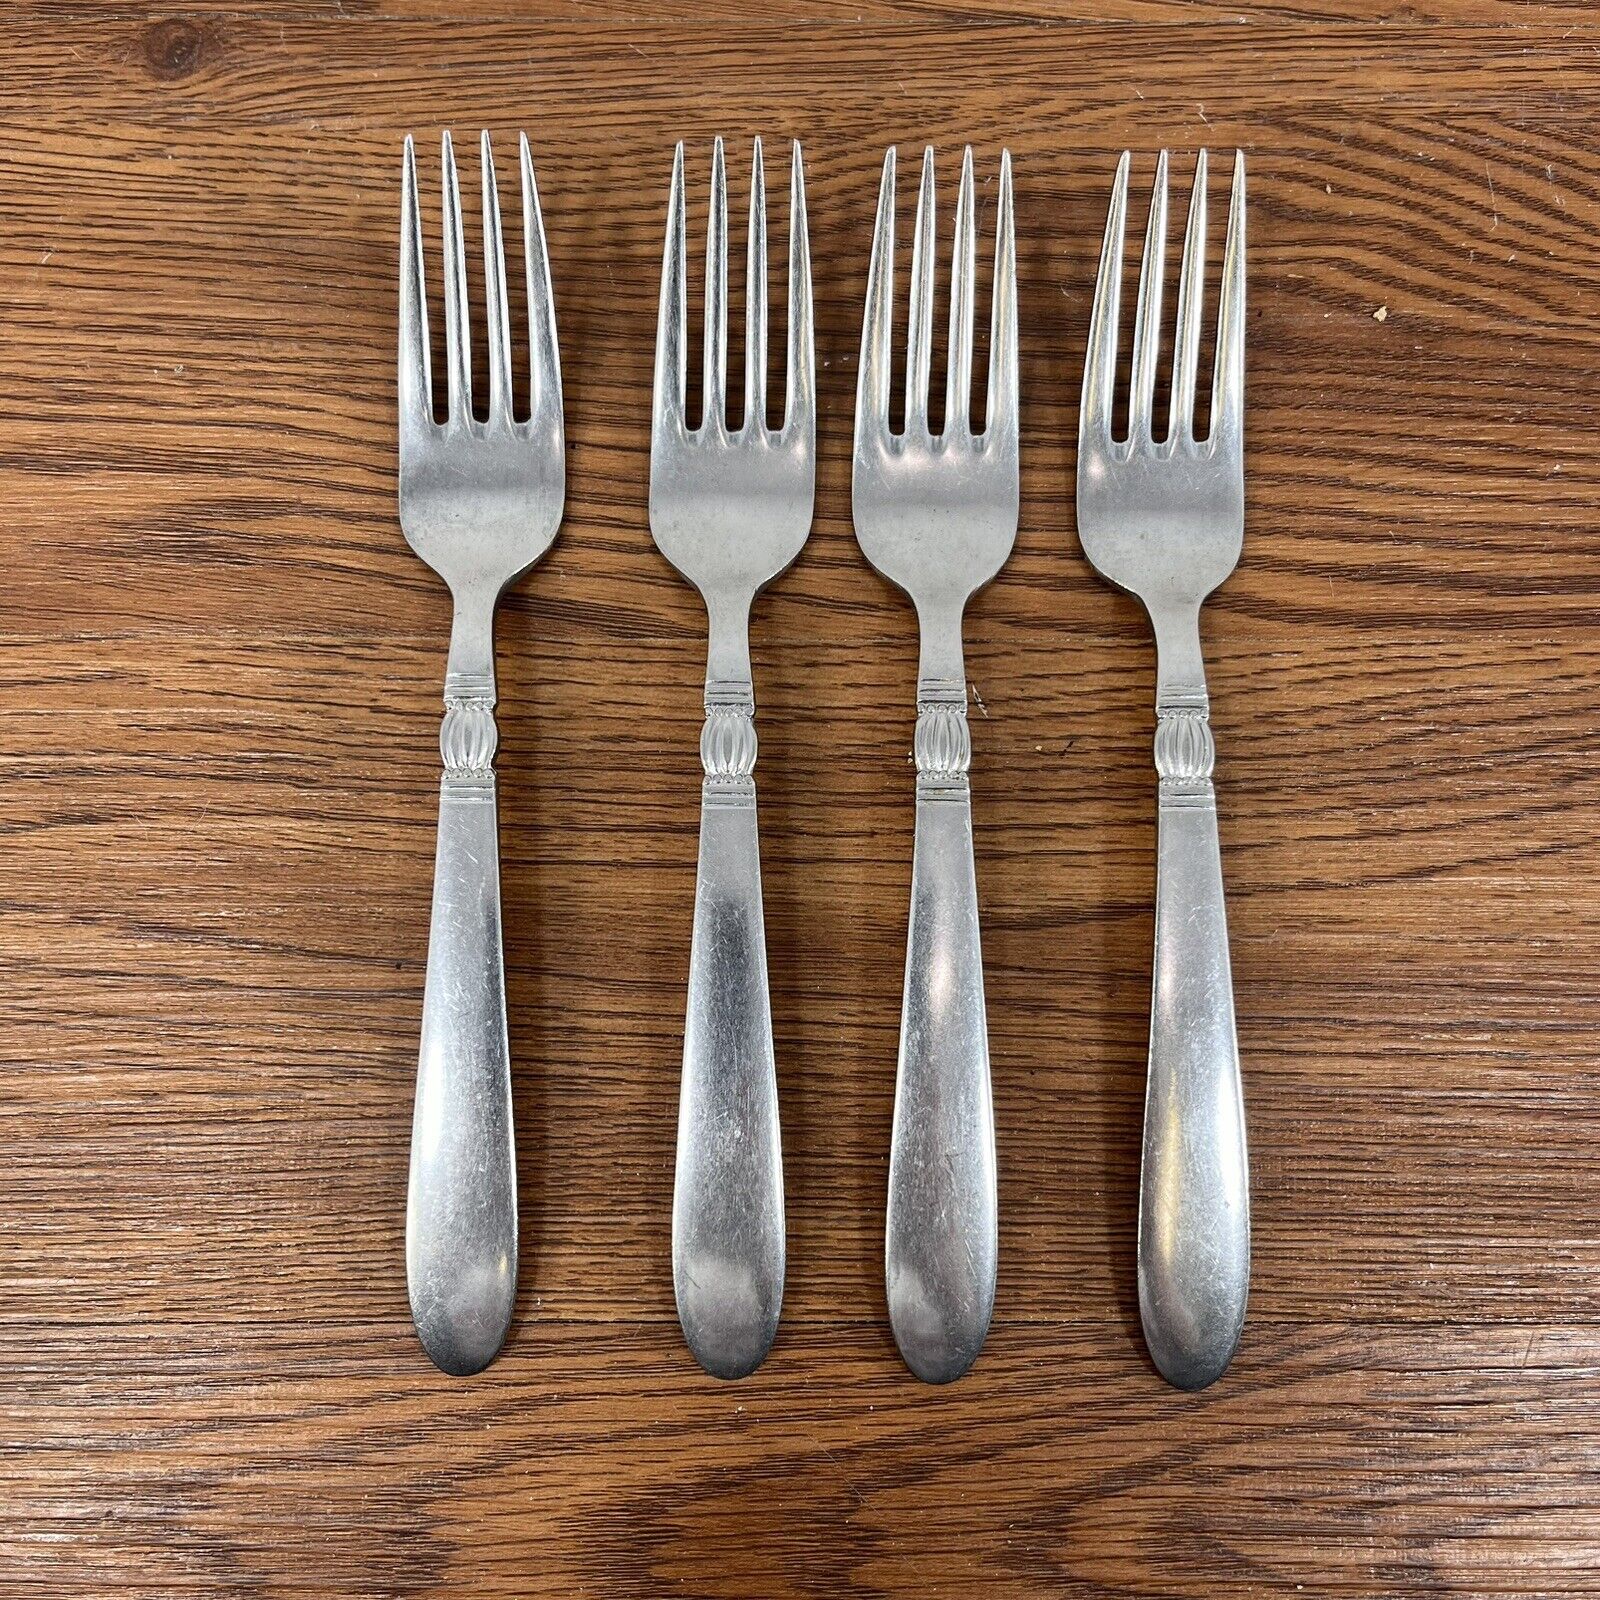 4 X Nasco Karen Stainless Flatware Pieces - Japan - Dinner Forks